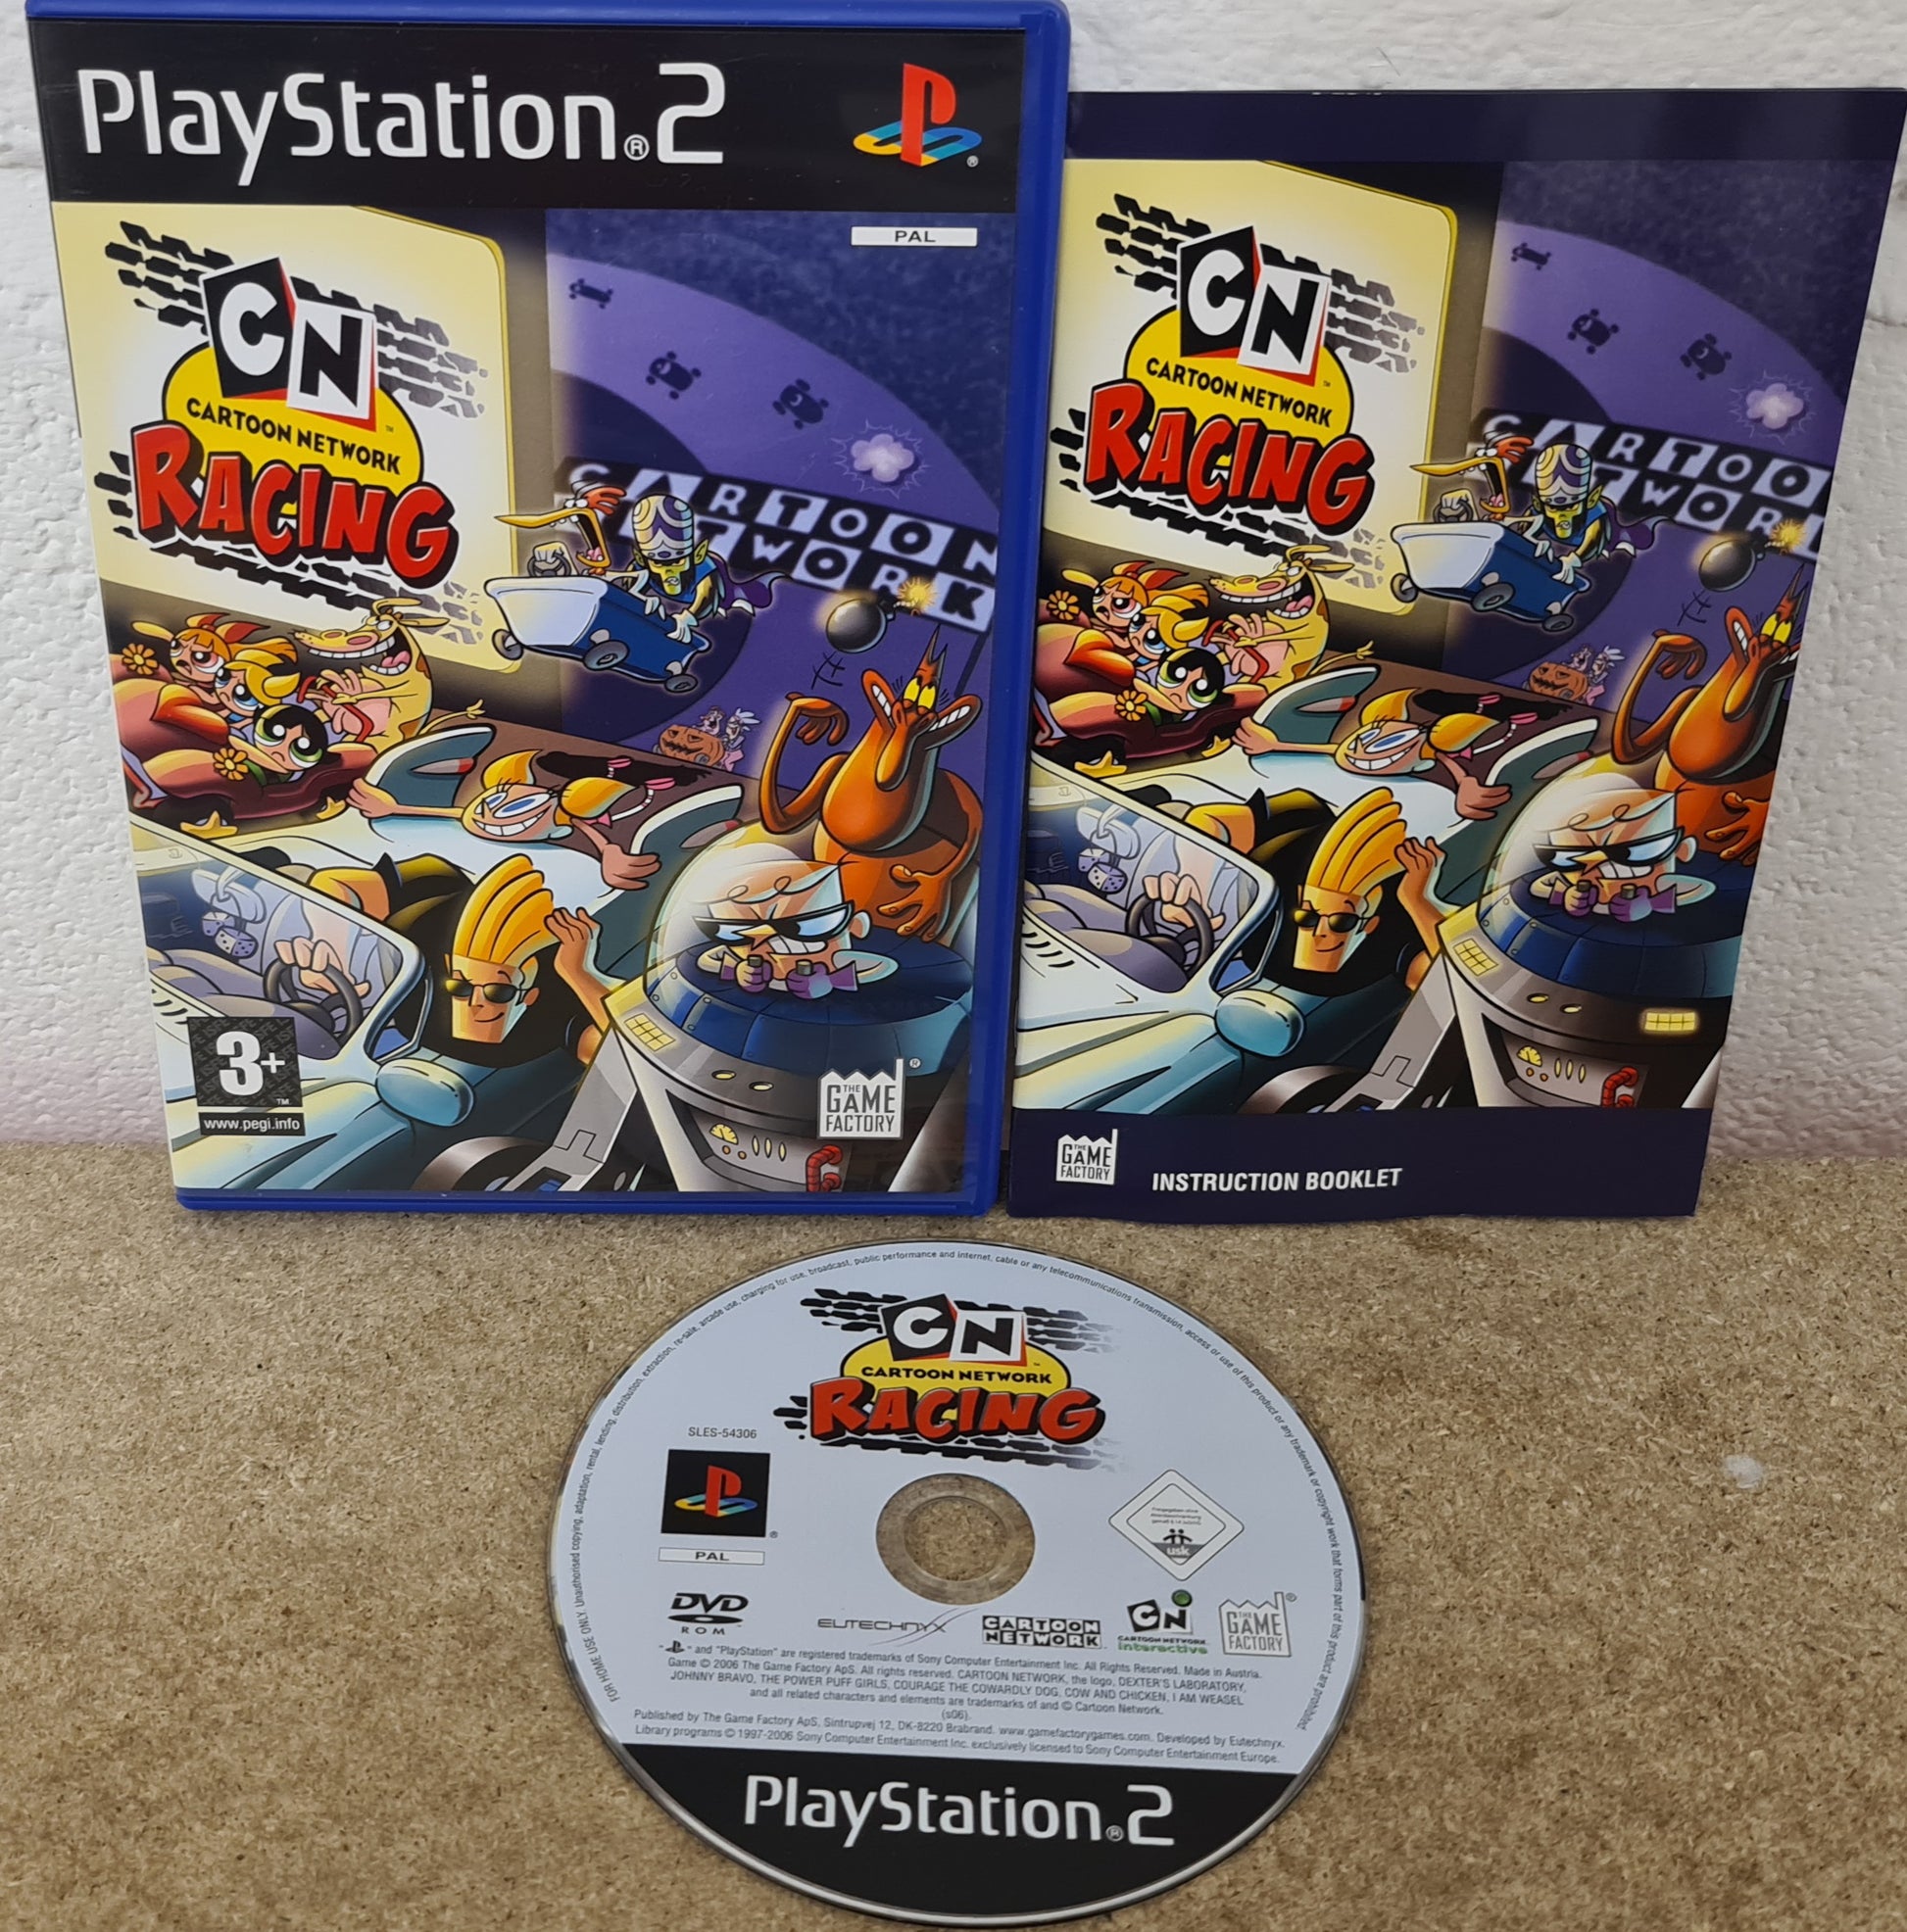 Cartoon Network Racing (Sony PlayStation 2, 2006)